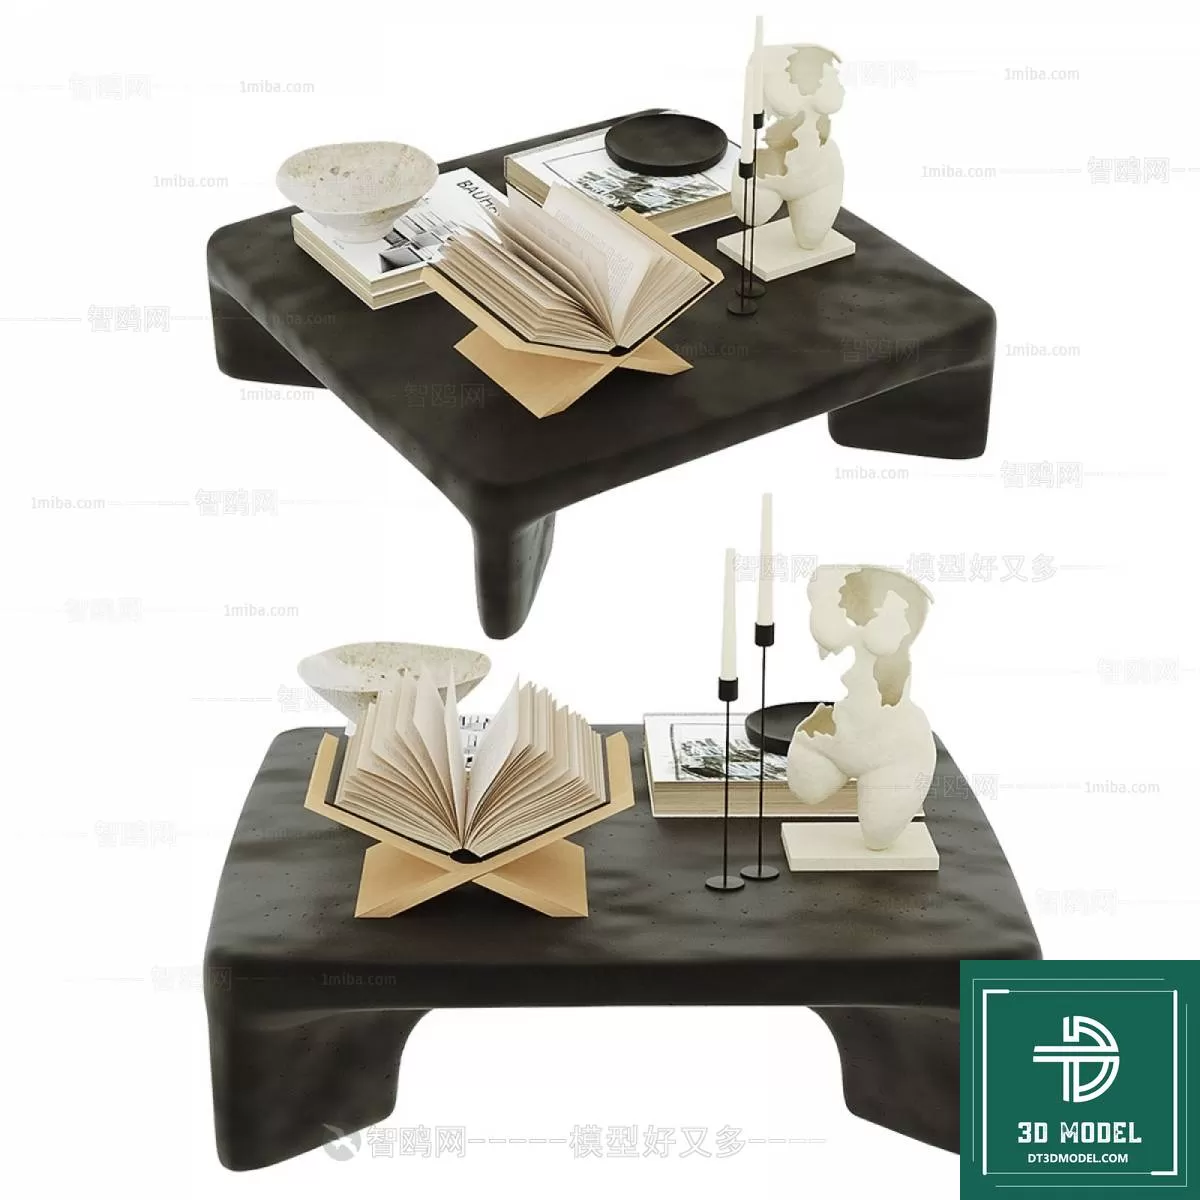 TEA TABLE – SOFA TABLE – 3D MODELS – 088